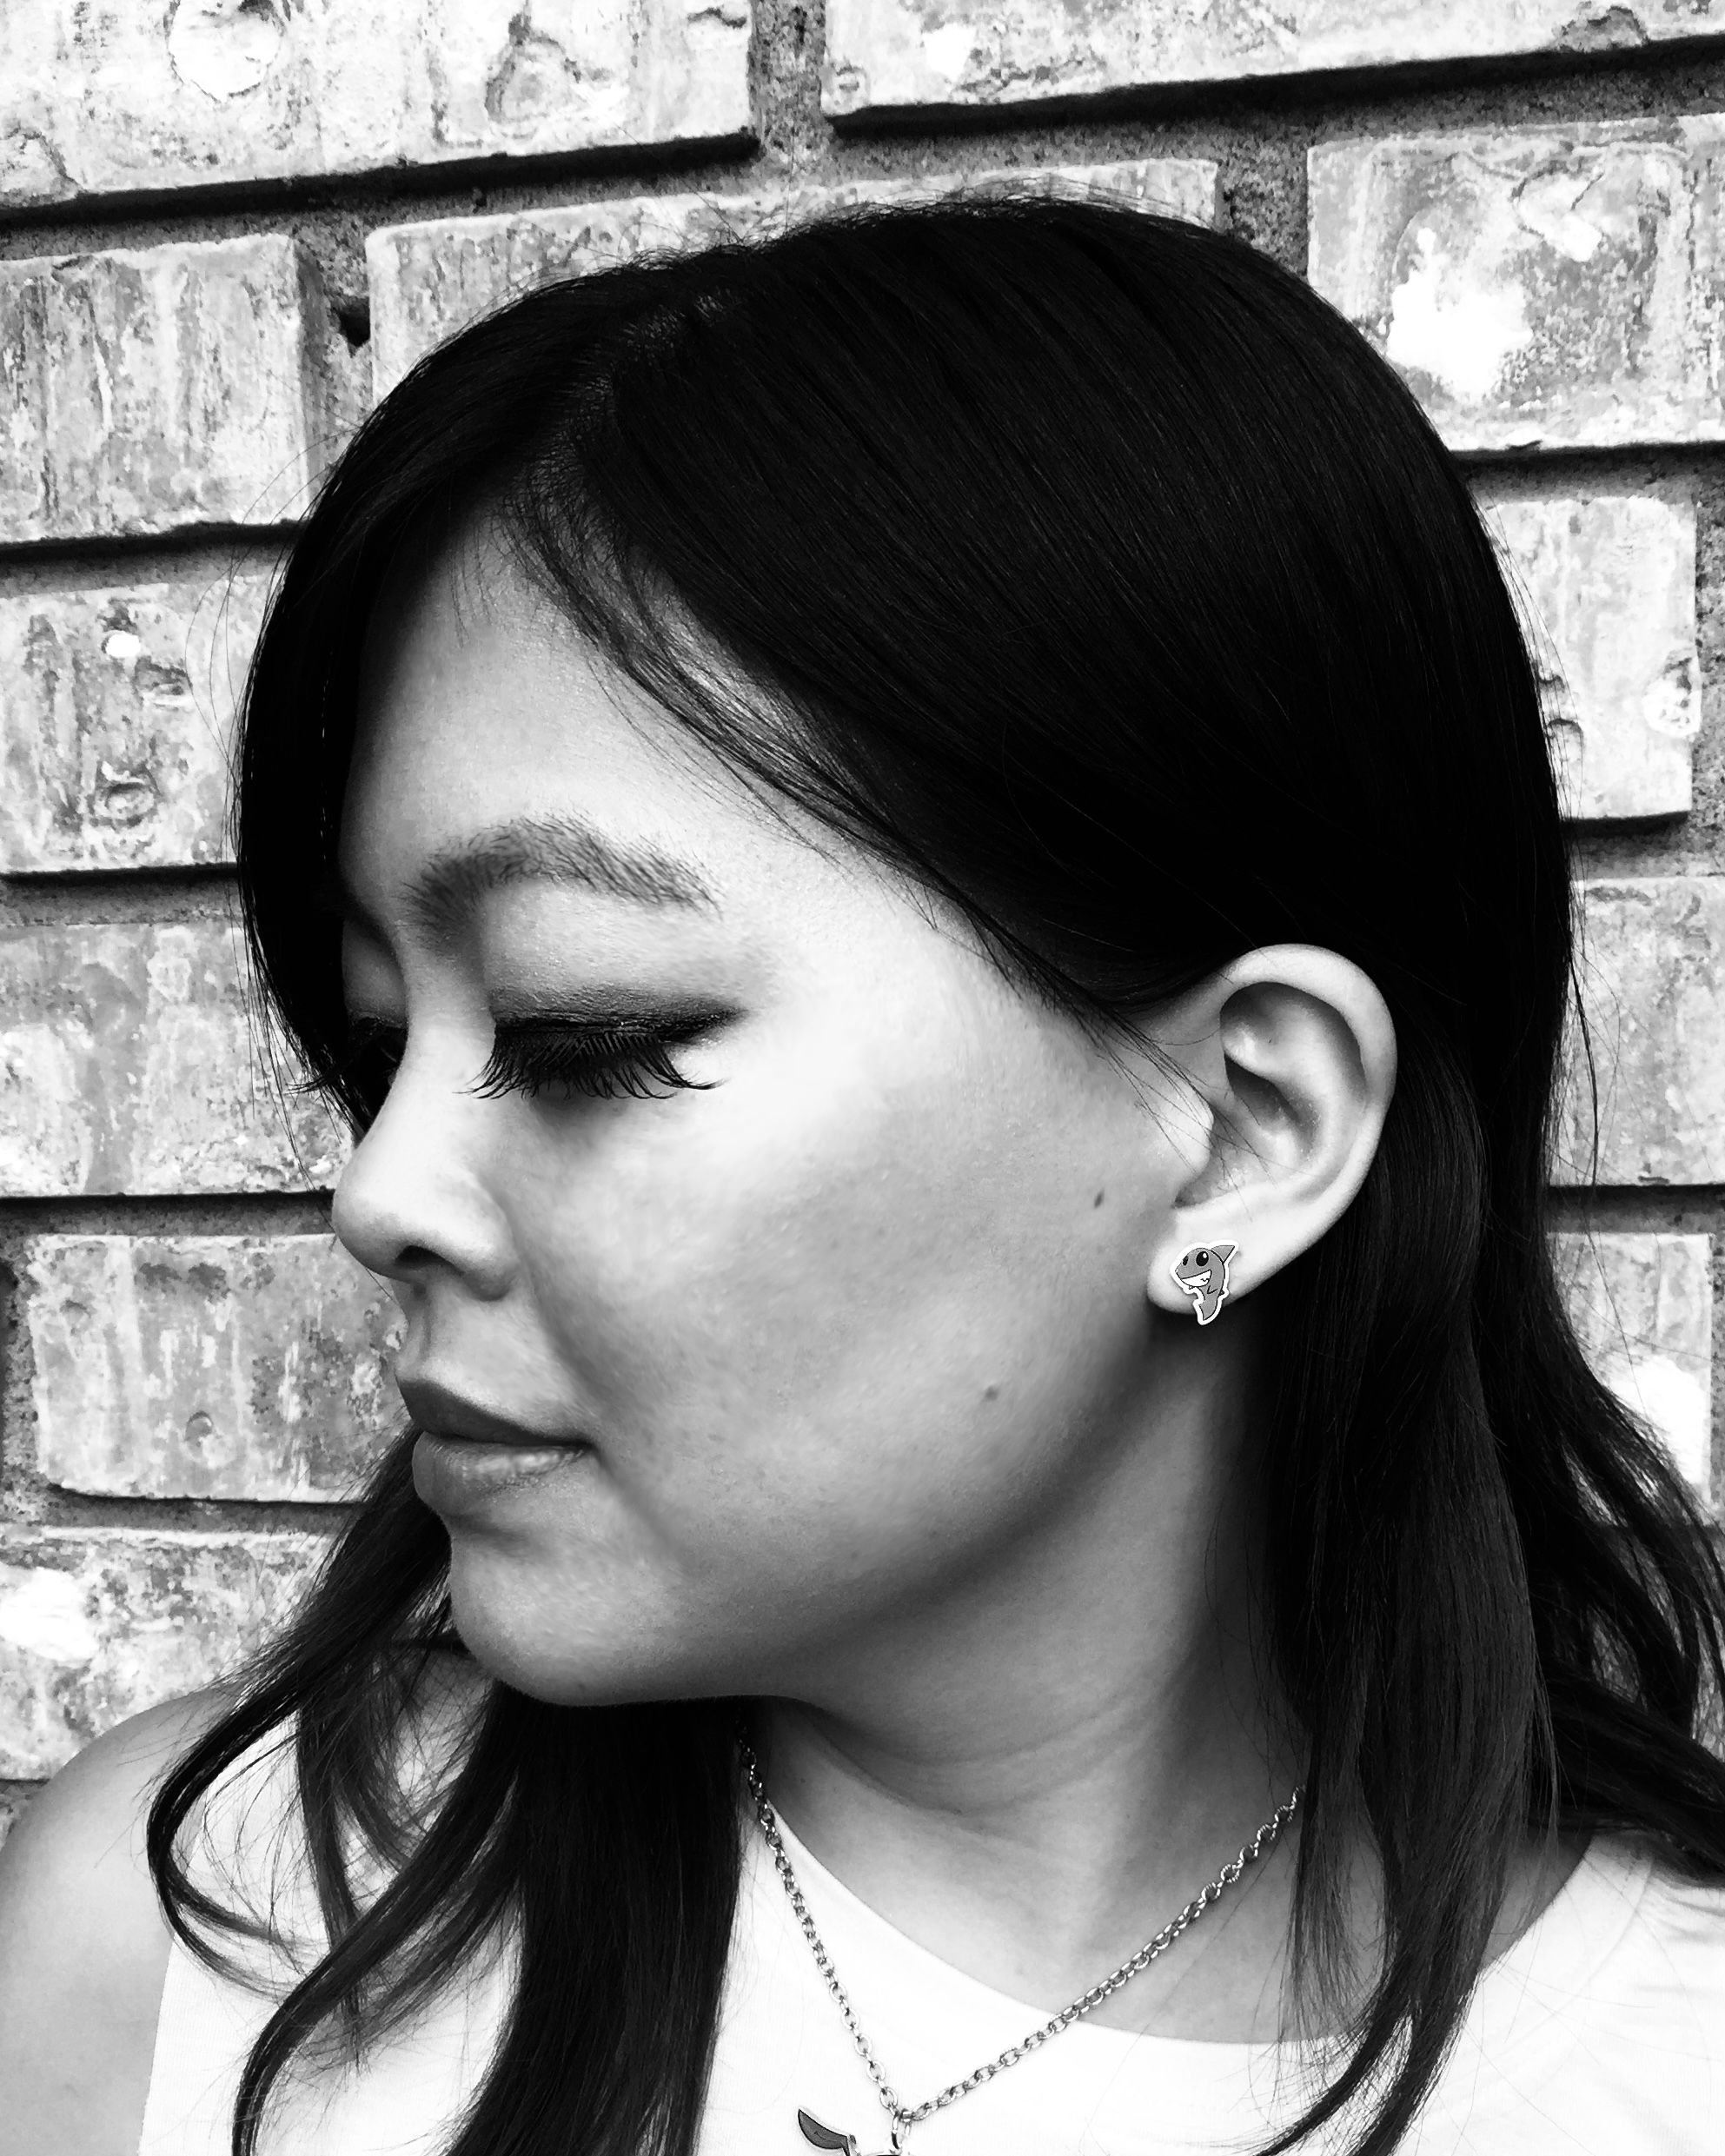 Kelsea Yu, a Taiwanese Chinese American femme. She has shoulder-length dark hair, long eyelashes, and a shark earring.